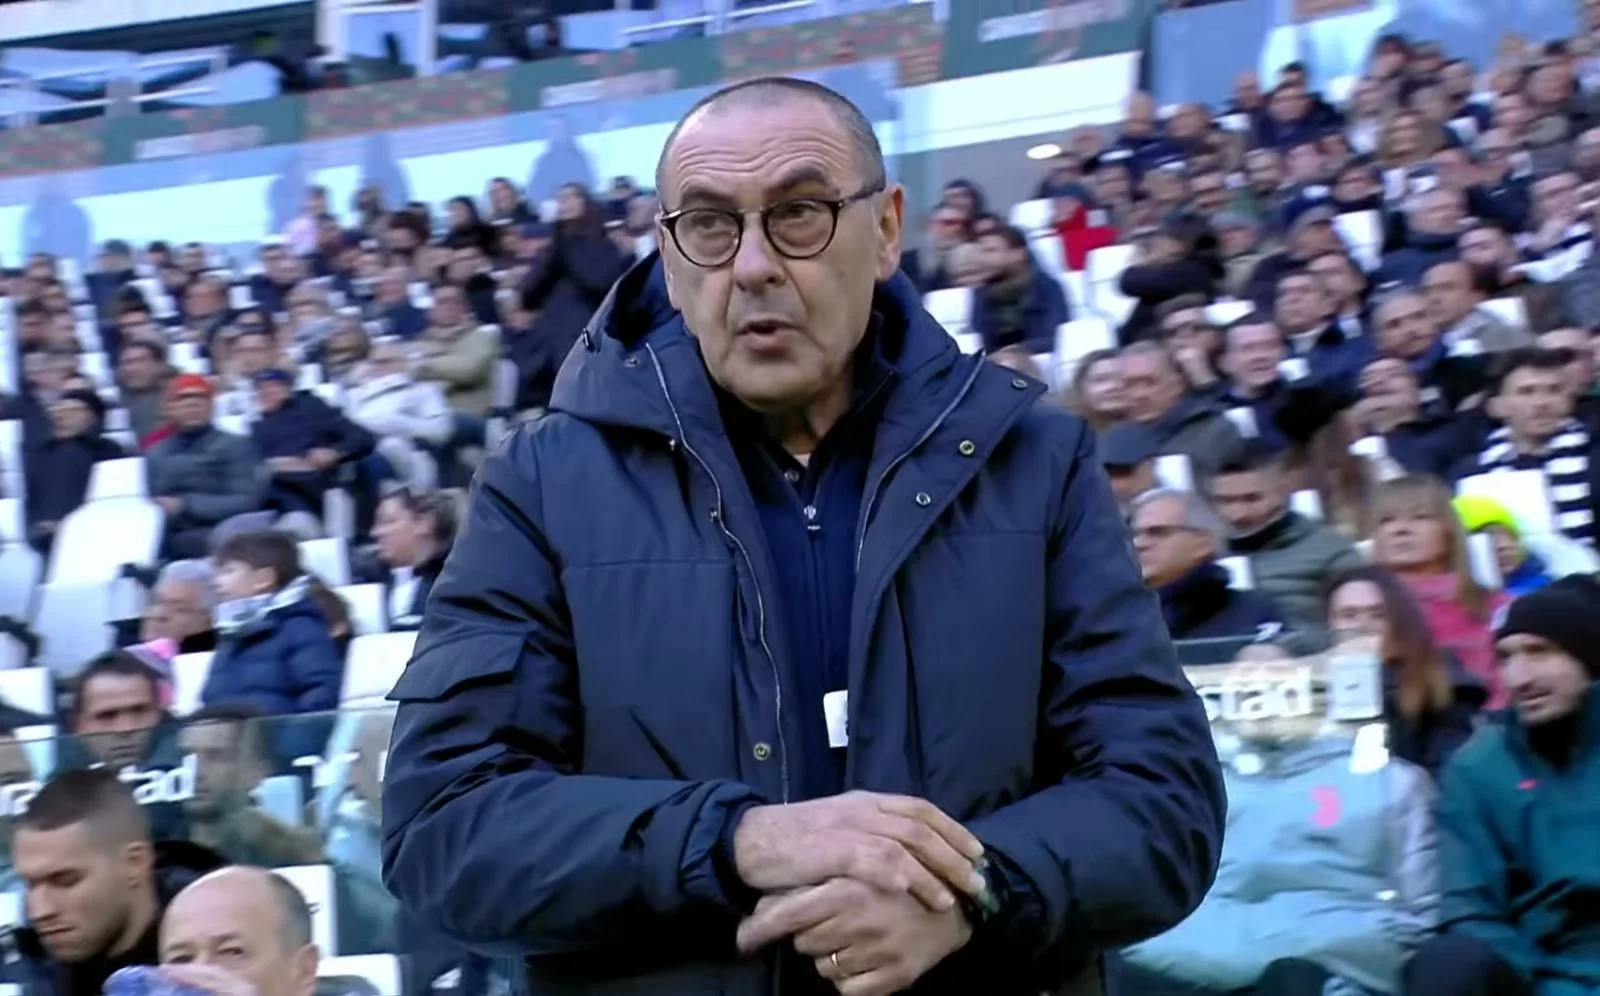 Bologna-Juve è già decisiva: Sarri deve vincere e riprendersi in mano i bianconeri